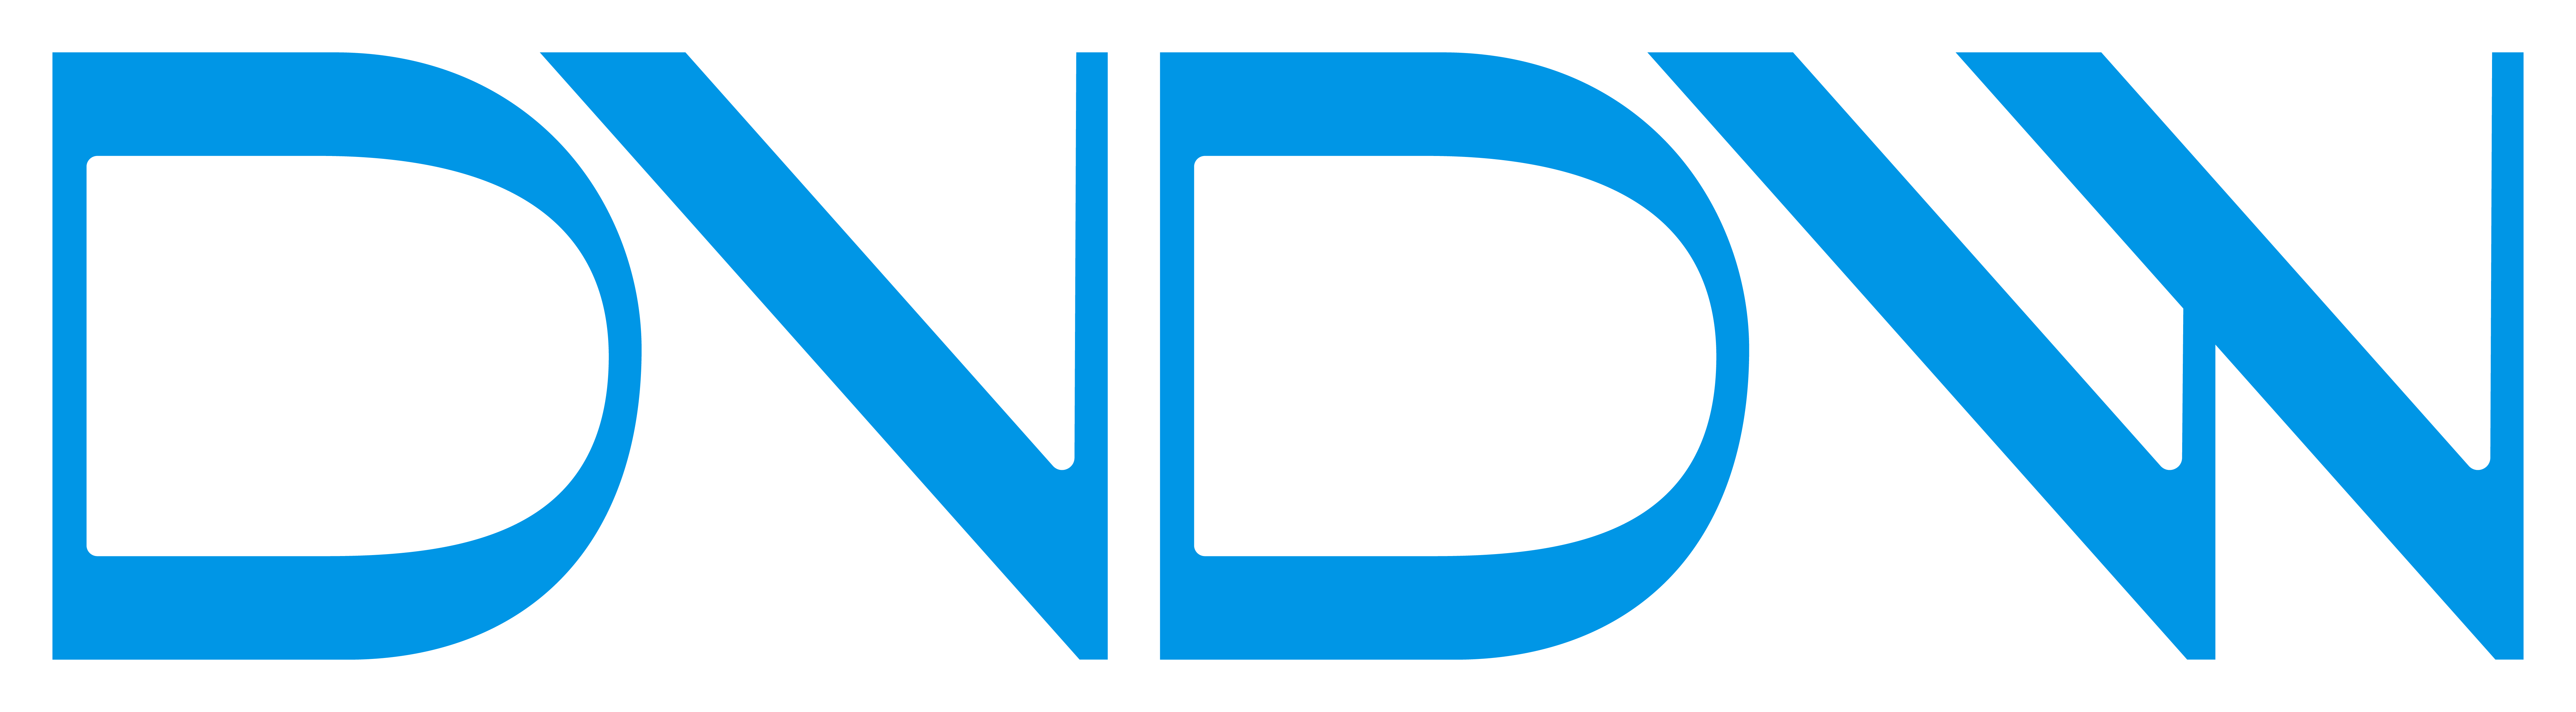 DVDW Advocaten logo